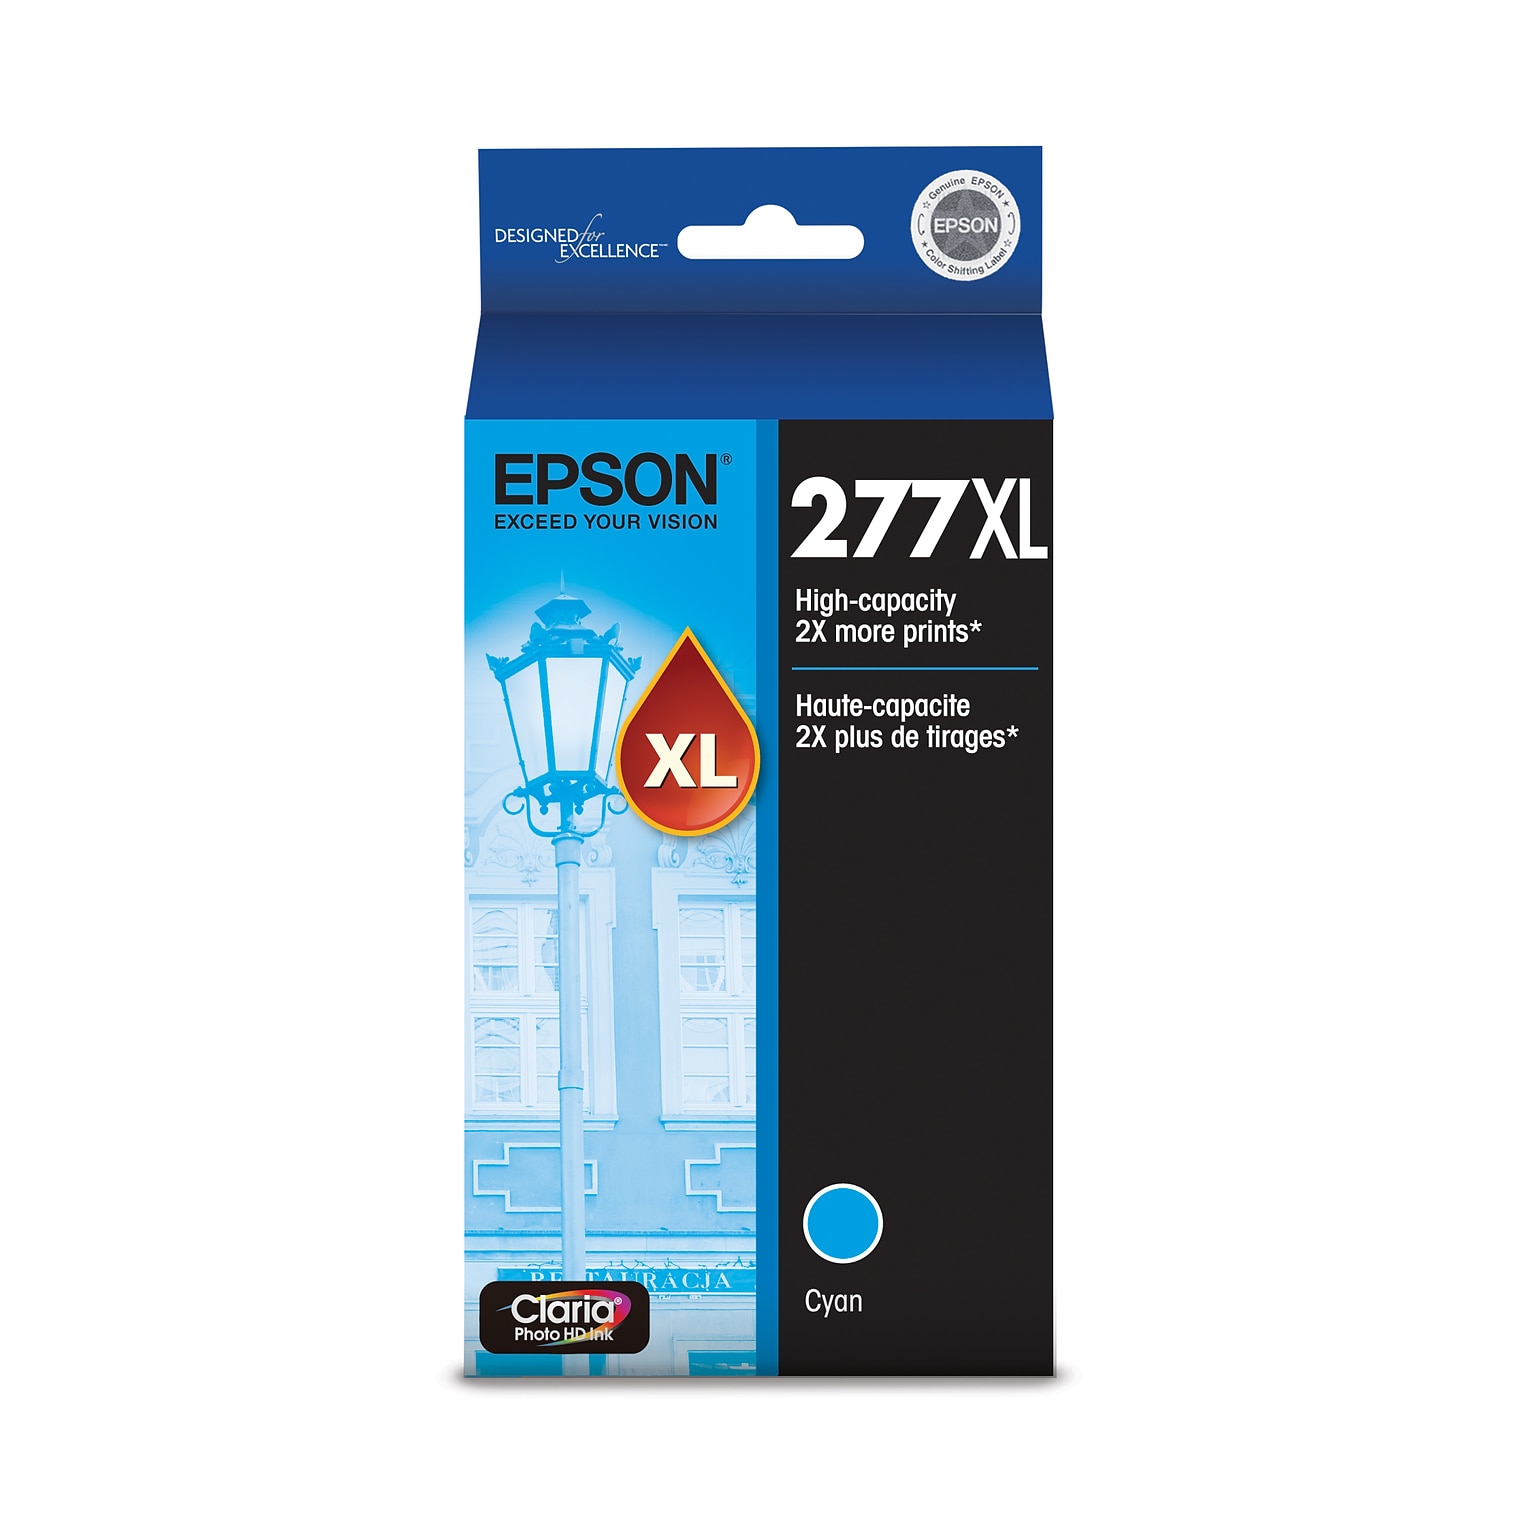 Epson T277XL Cyan High Yield Ink Cartridge